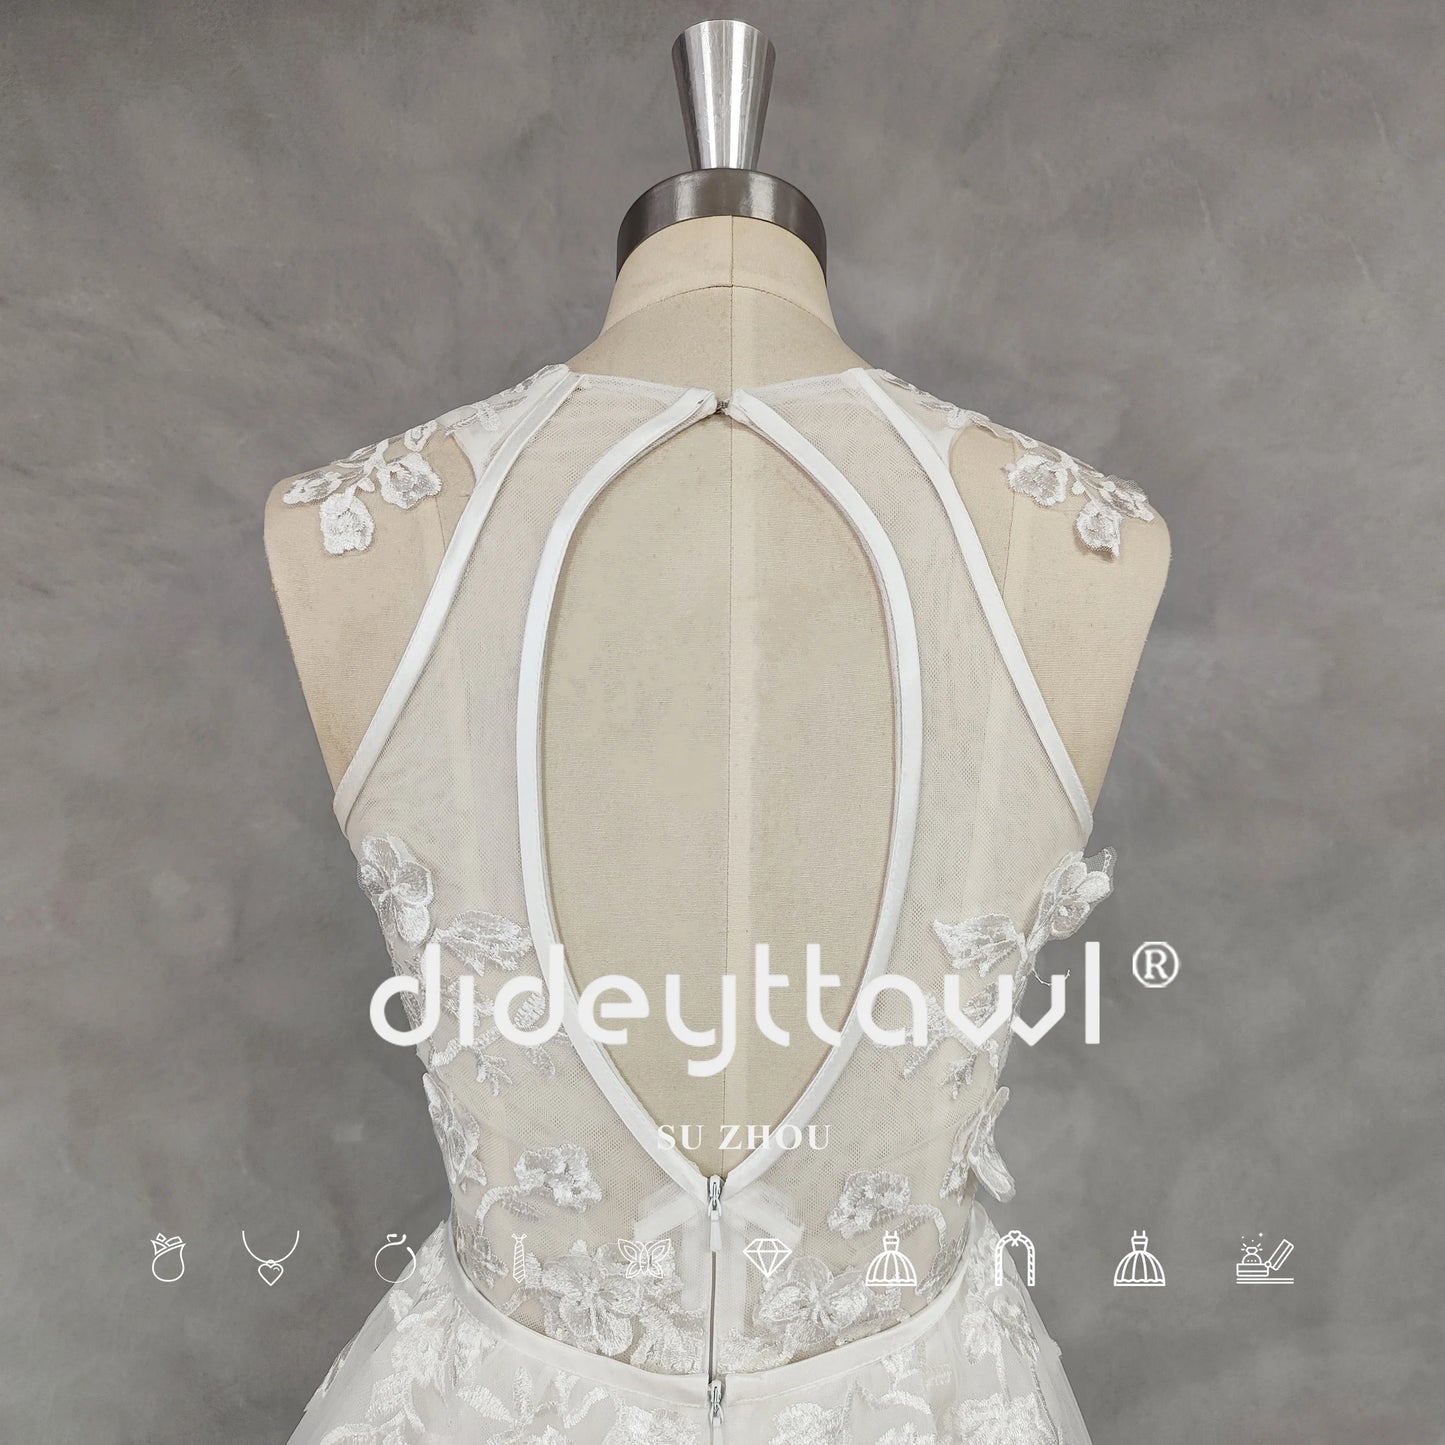 O-Neck Appliques Sheath Short Wedding Dress Detachable Train Cut Out Back Above Knee Mini Bridal Gown